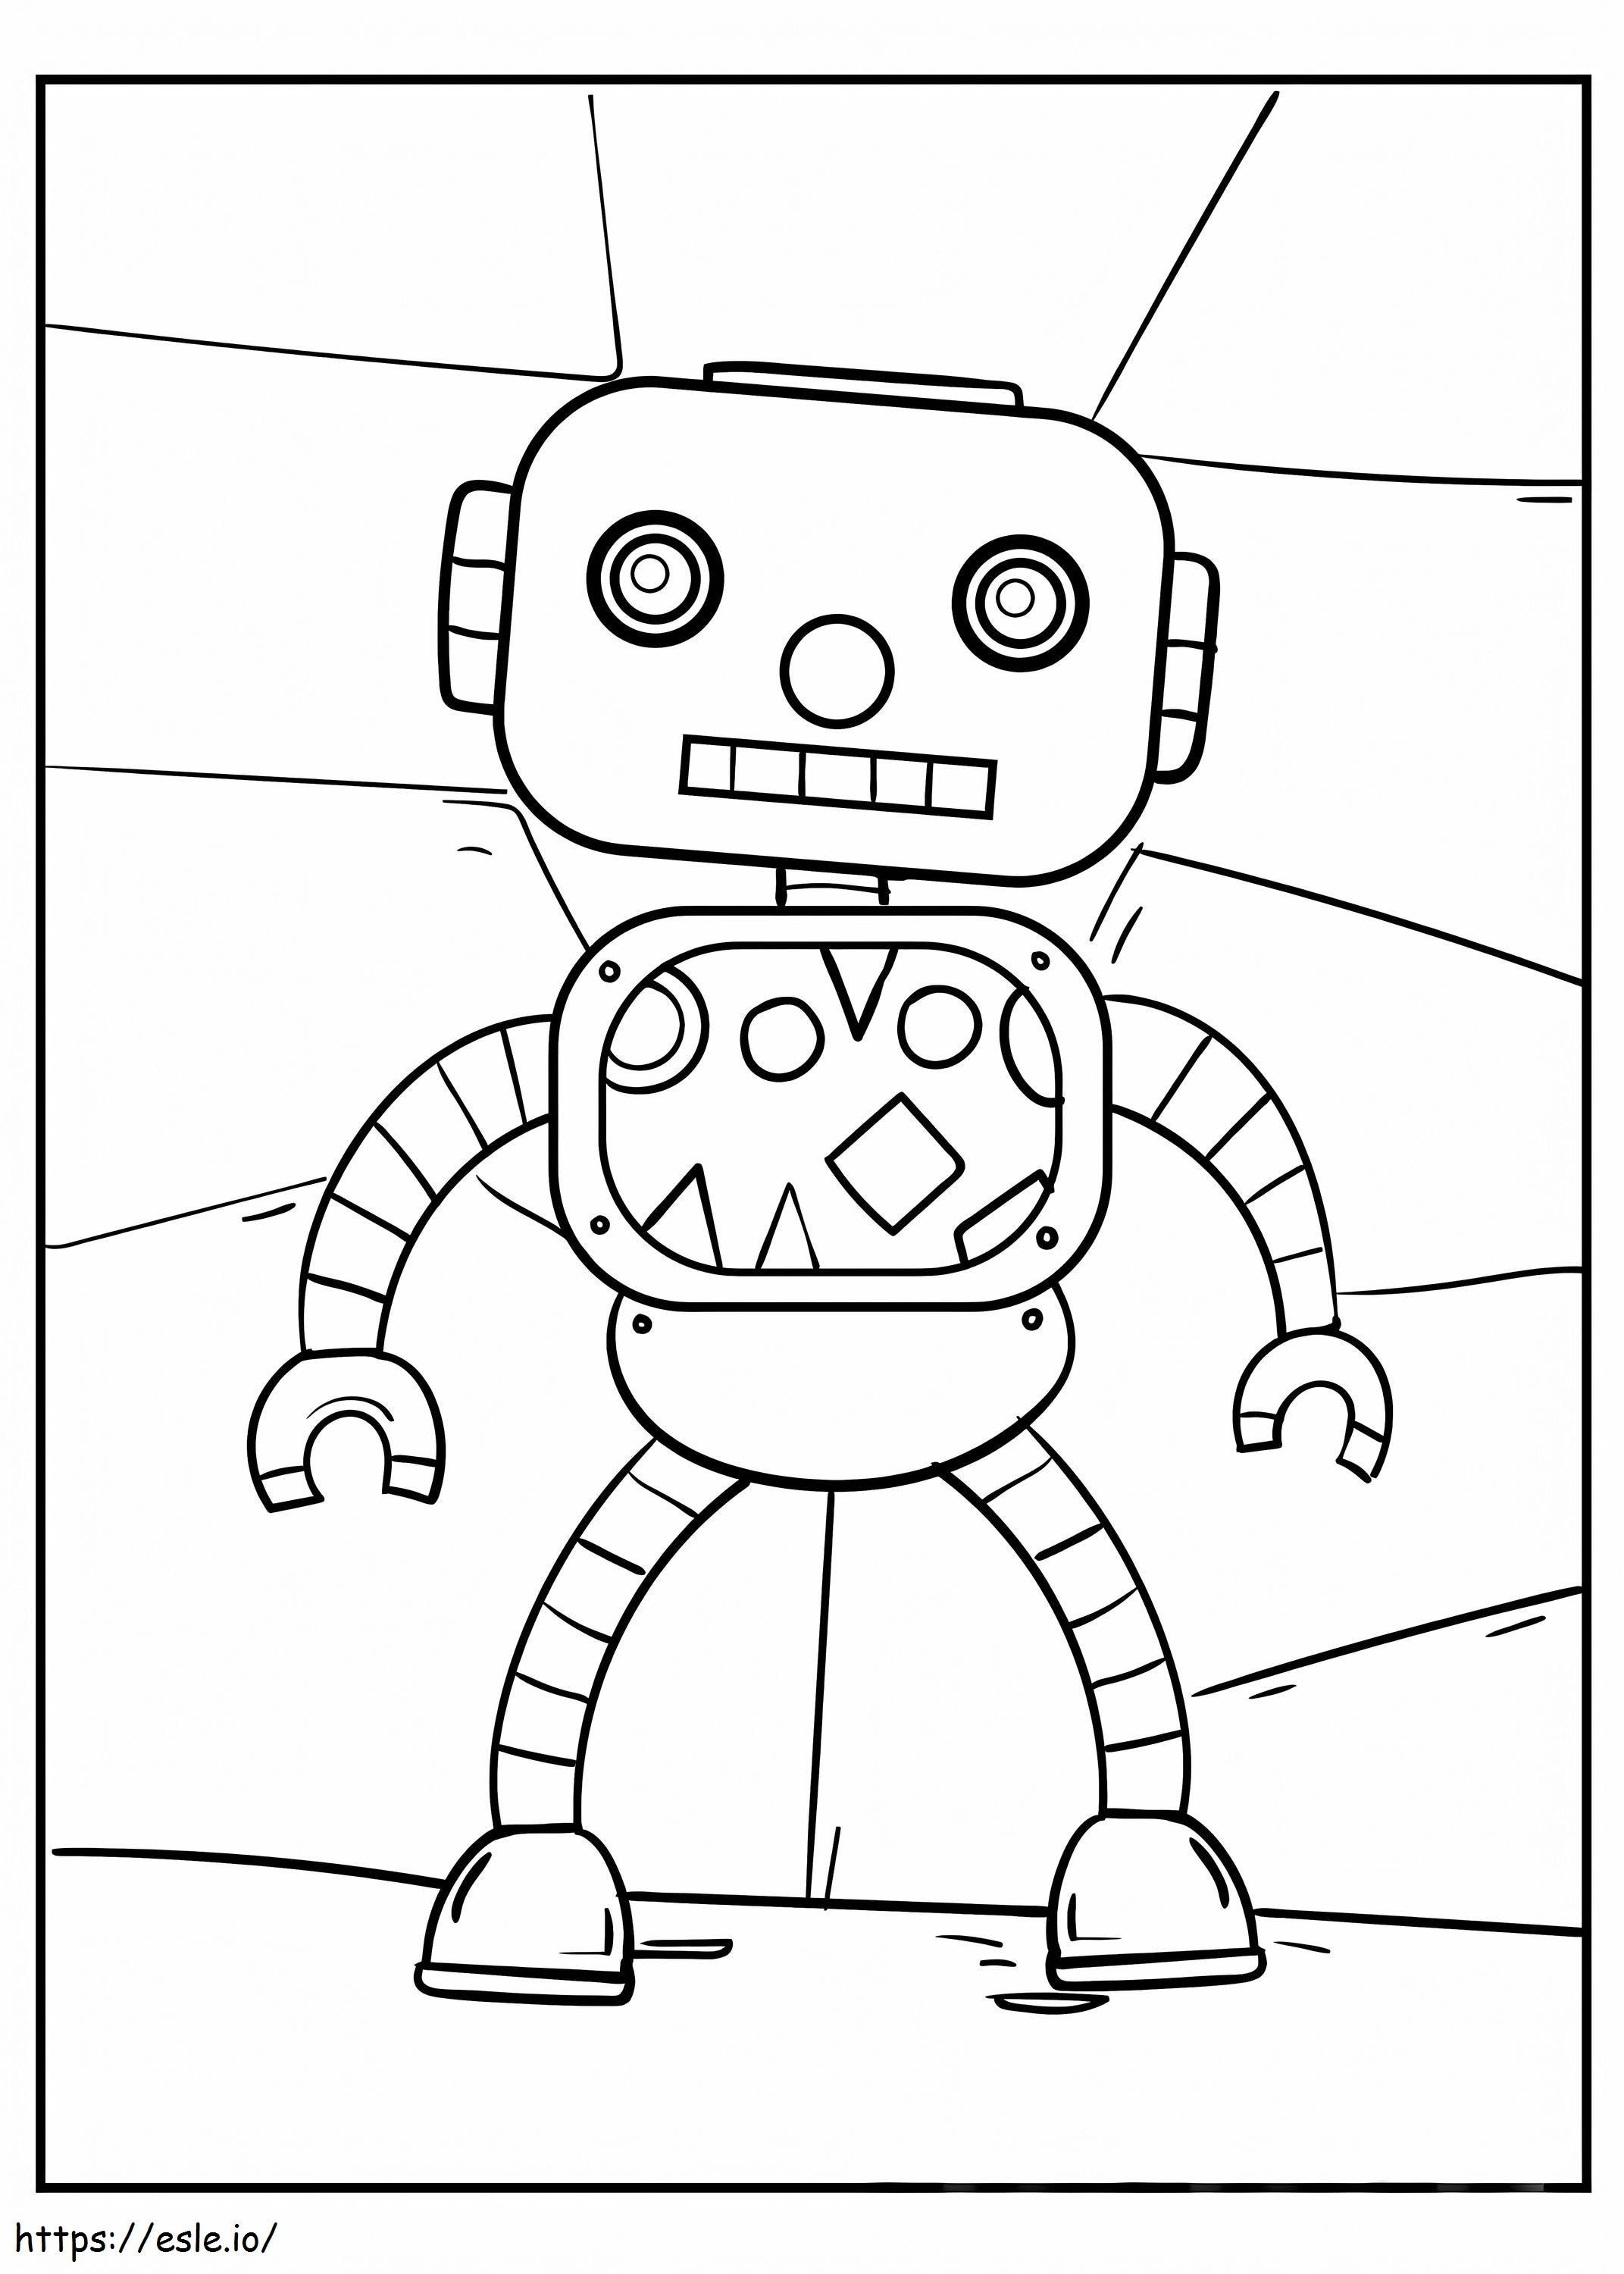 Bom menino robô para colorir